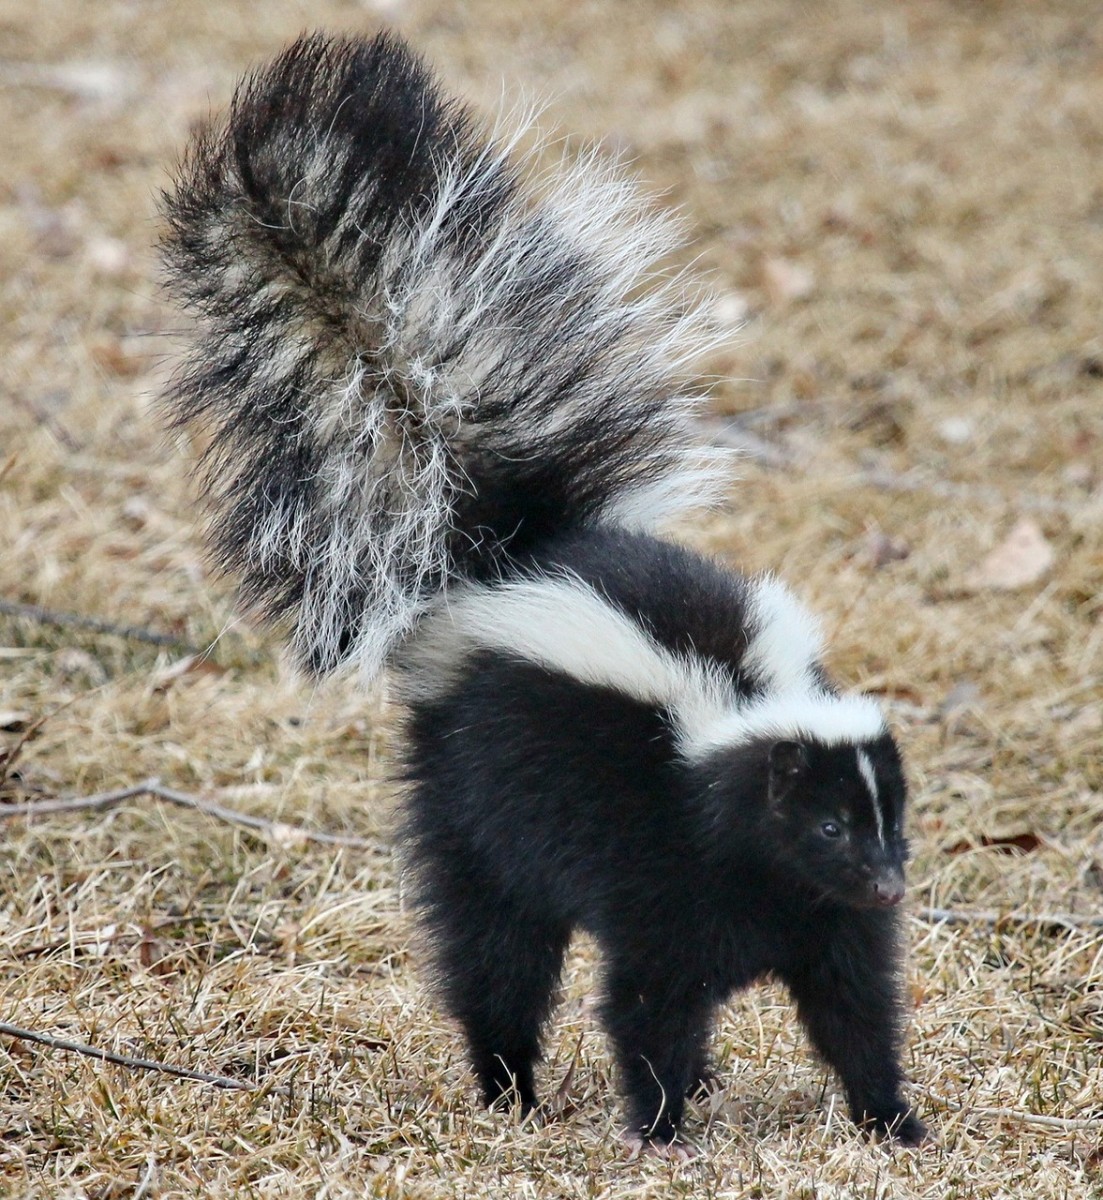 Stinky the skunk